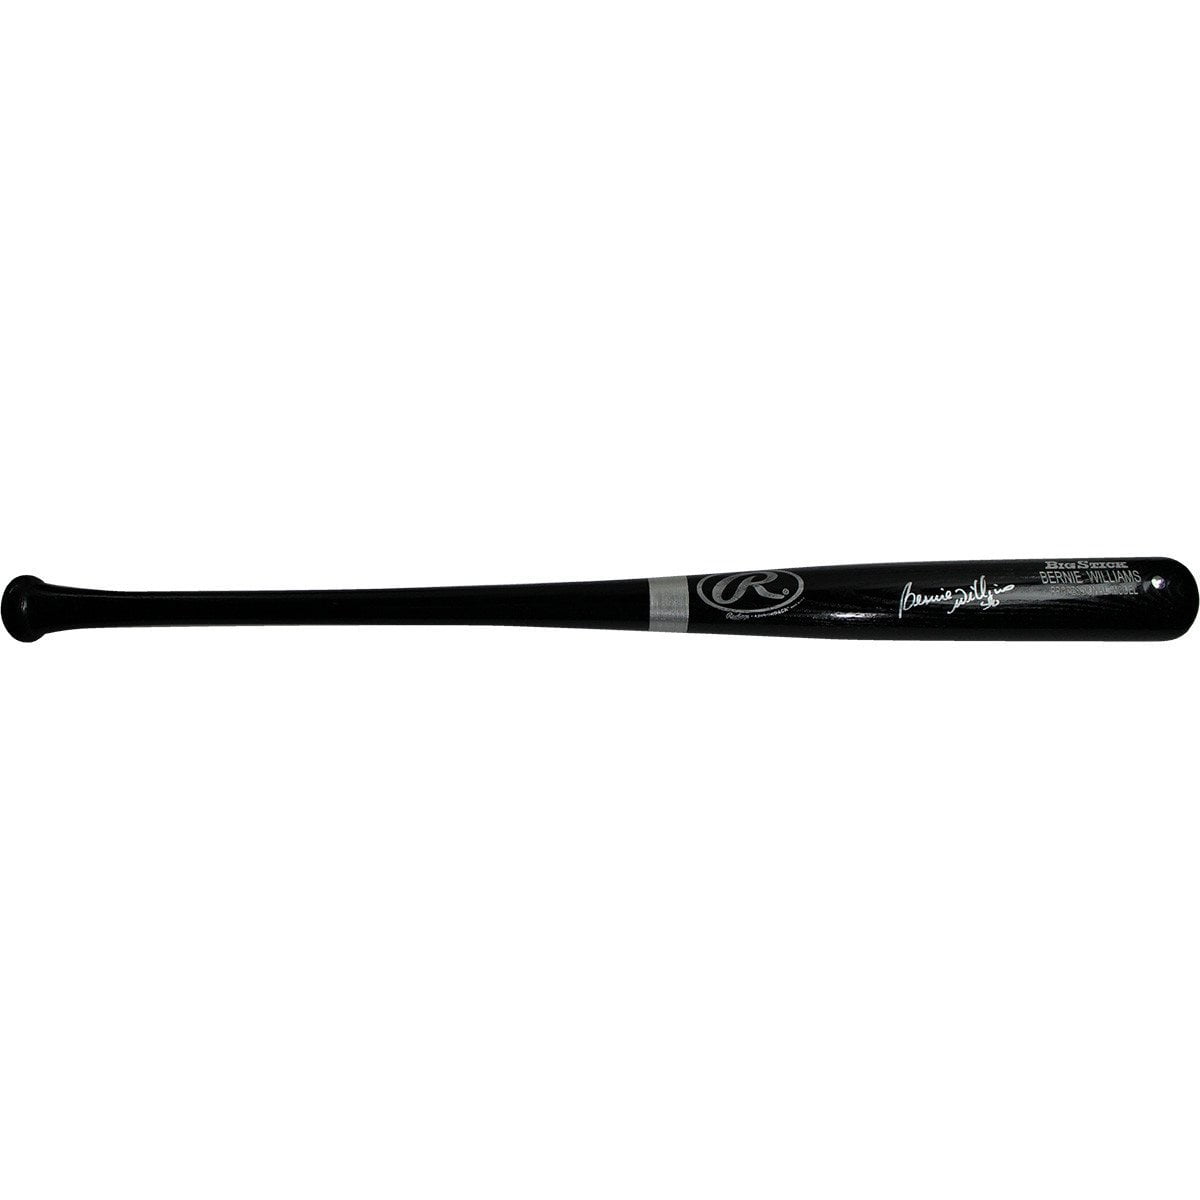 Rawlings Big Stick Bernie Williams Signed Baseball Bat, 